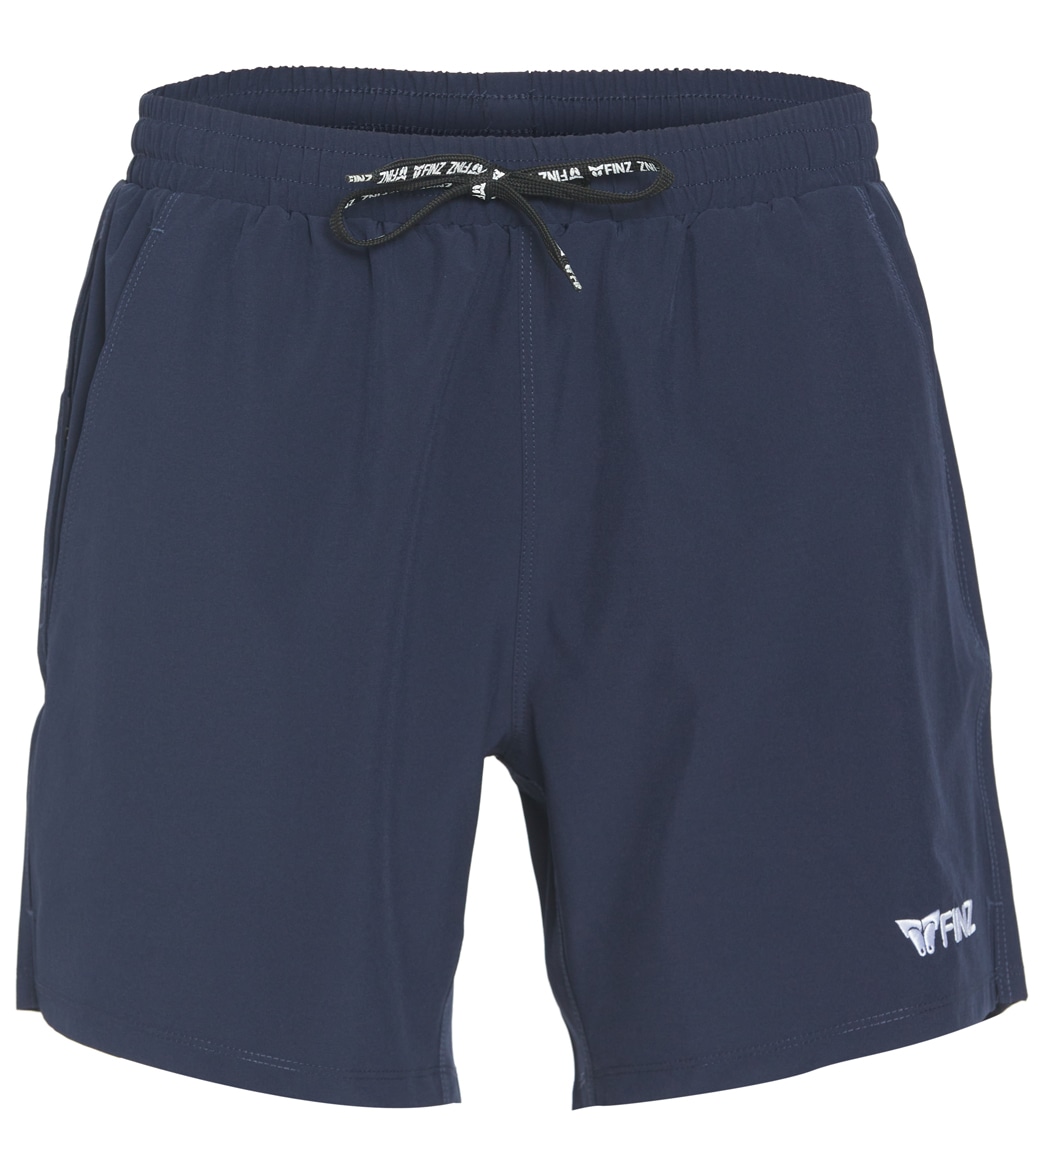 Finz Men's Beach Shorts - Navy Large - Swimoutlet.com